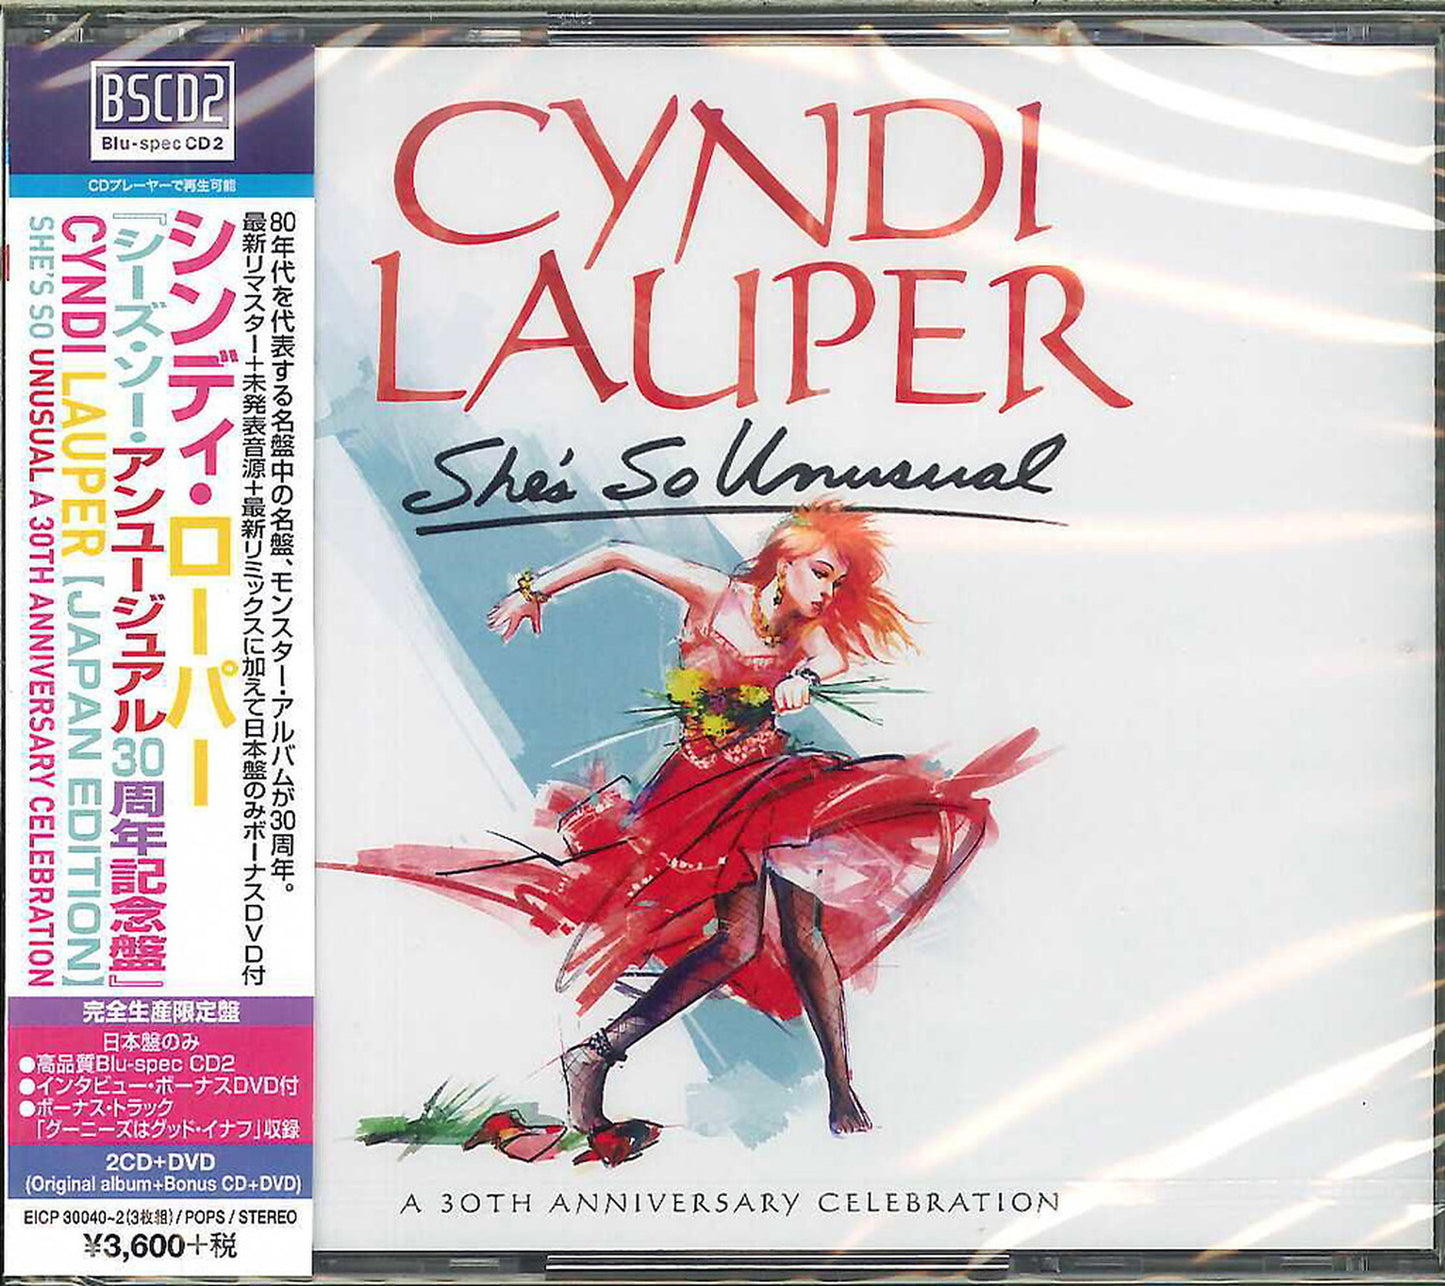 Cyndi Lauper - She'S So Unusual 30Th Anniversary Edition - Japan  2 Blu-spec CD2+DVD Bonus Track